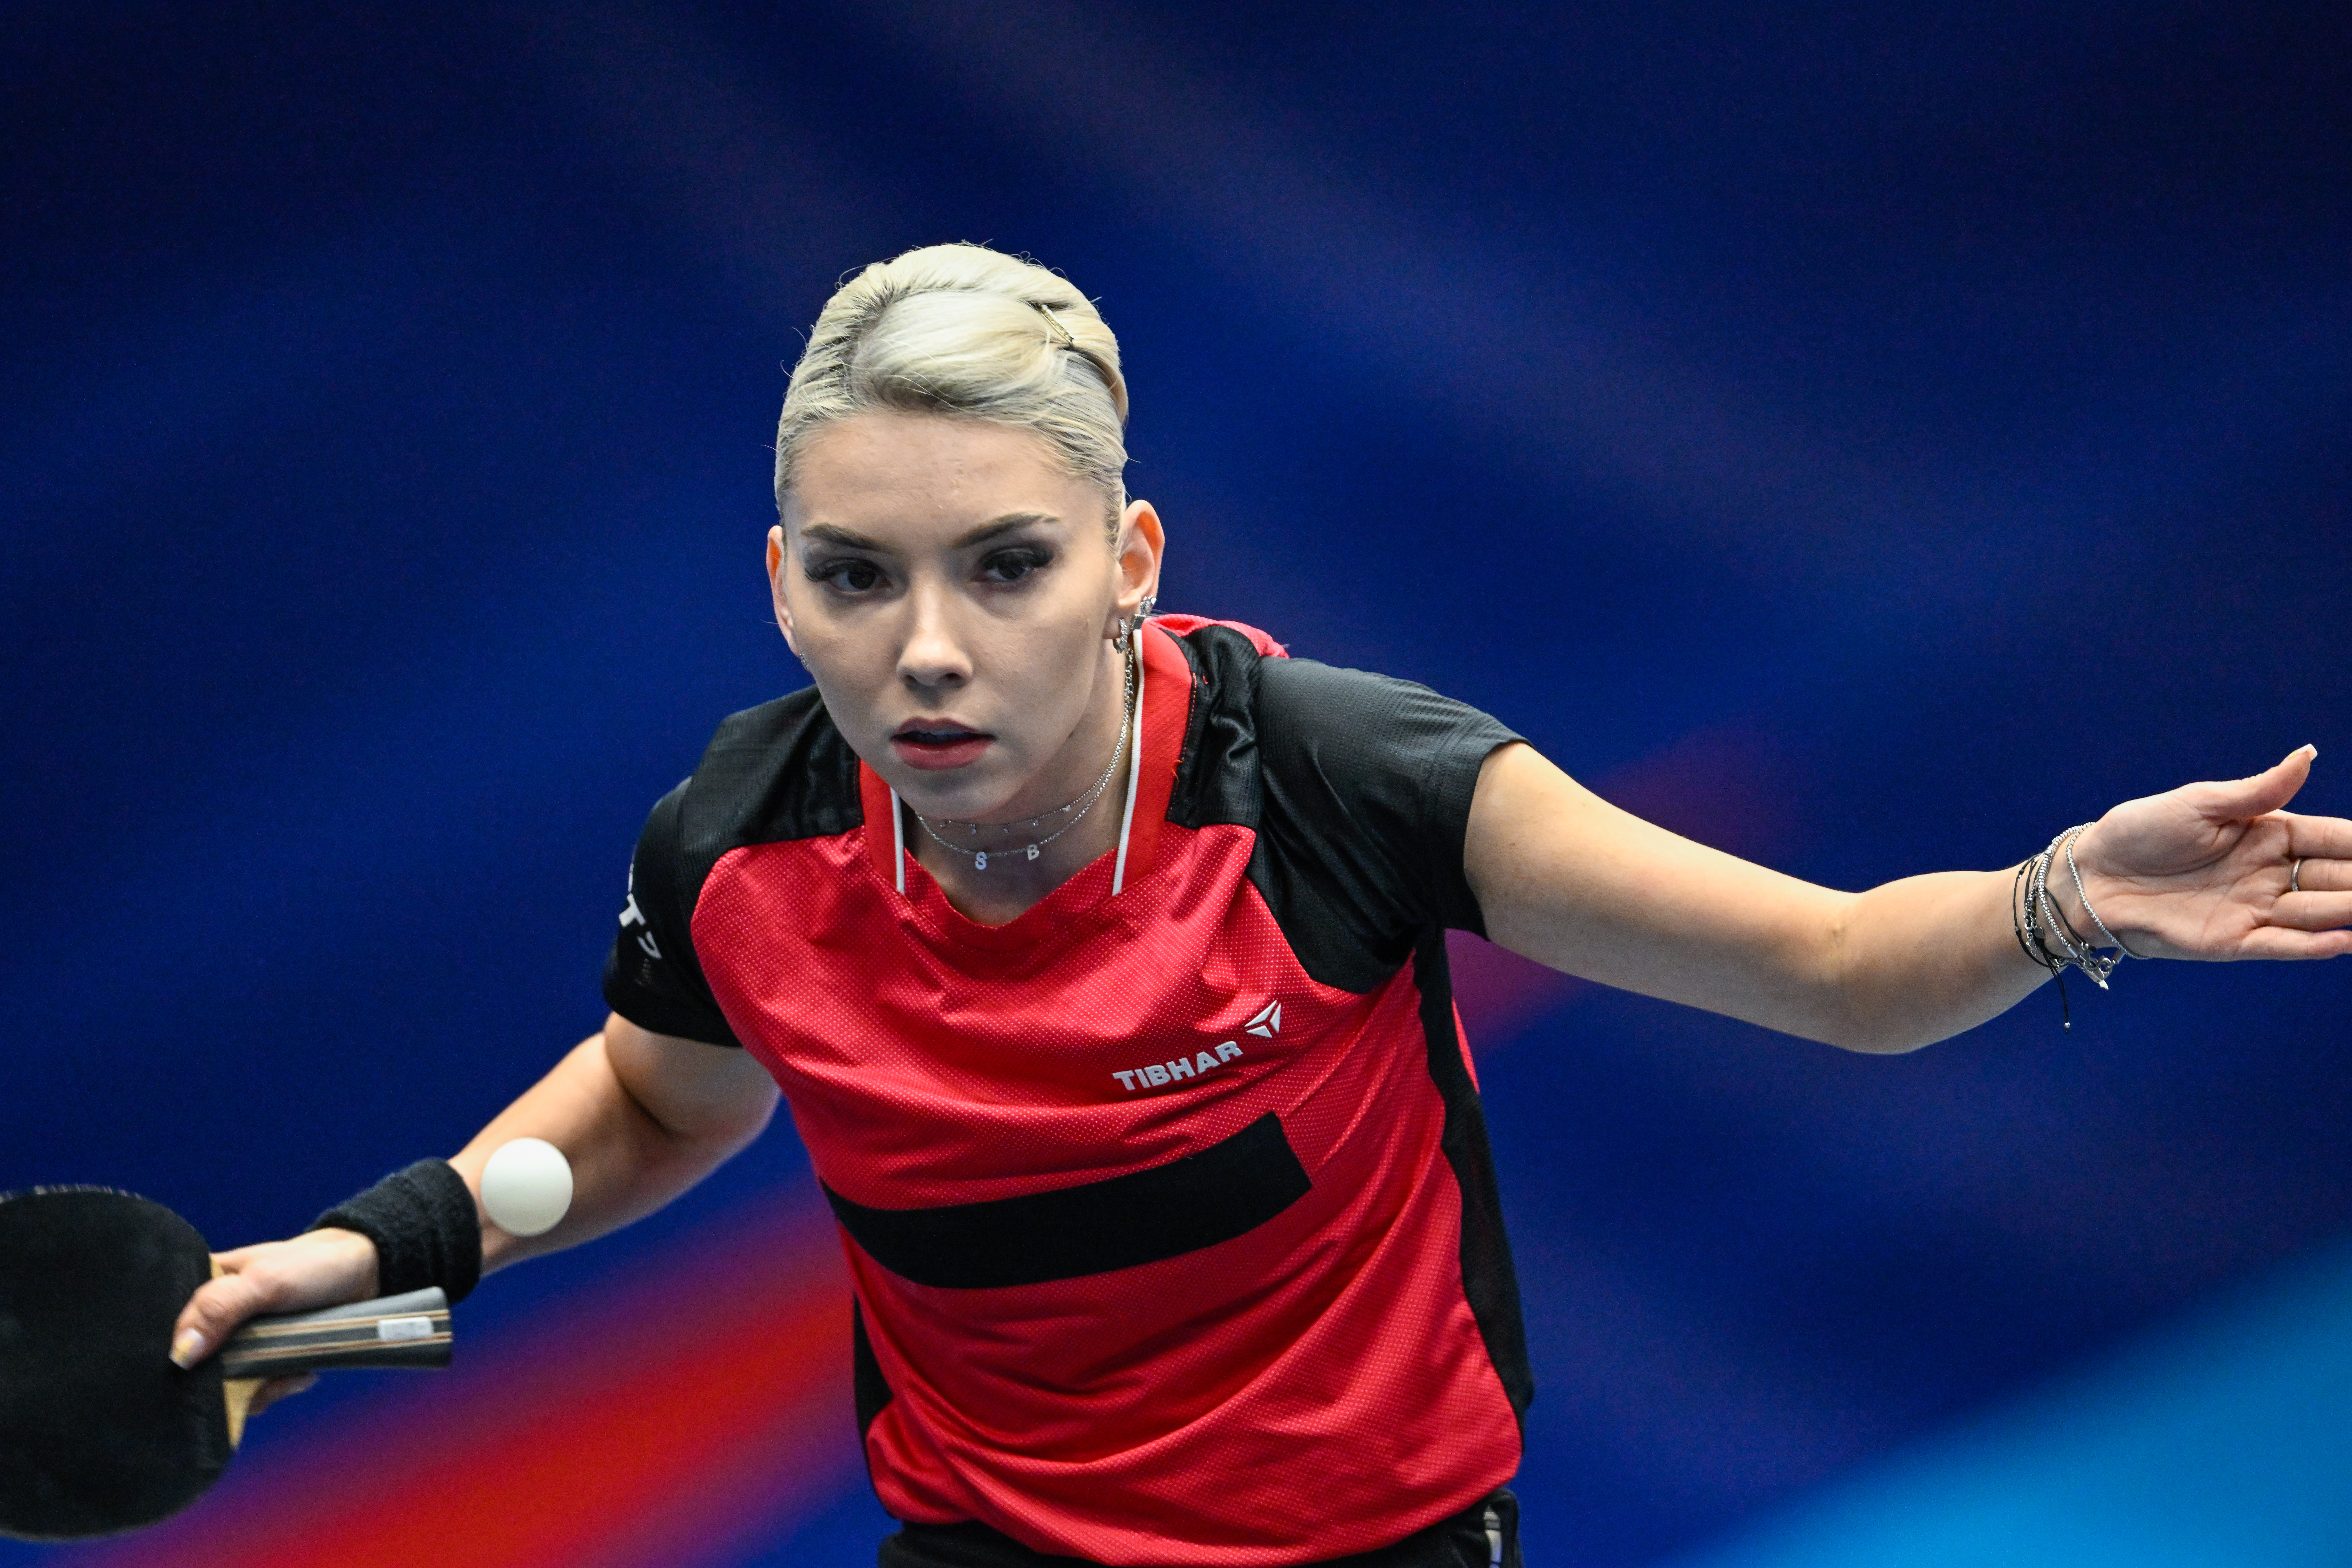 Bernardette SZOCS of Romania wins gold in women‘s individual table tennis tournament